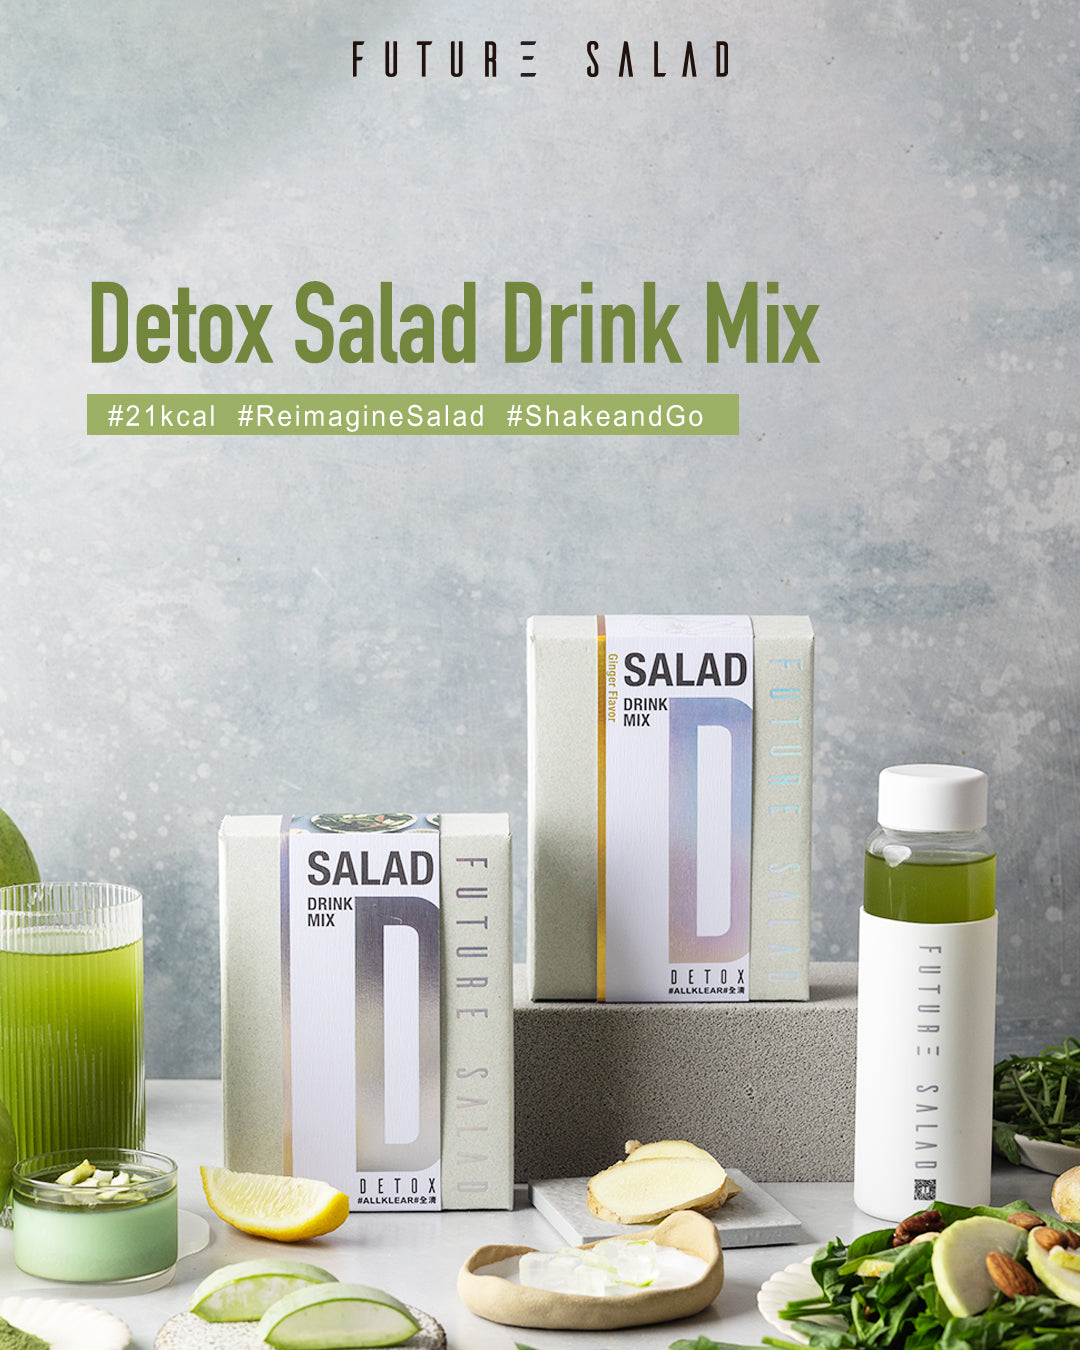 Detox Salad Drink Mix #21 Kcal #Detox with Ease #ShakeandGreen #DrinkableWellness |  Detox Salad Drink Mix 7 Sachets | Detox Series | Future Salad Allklear